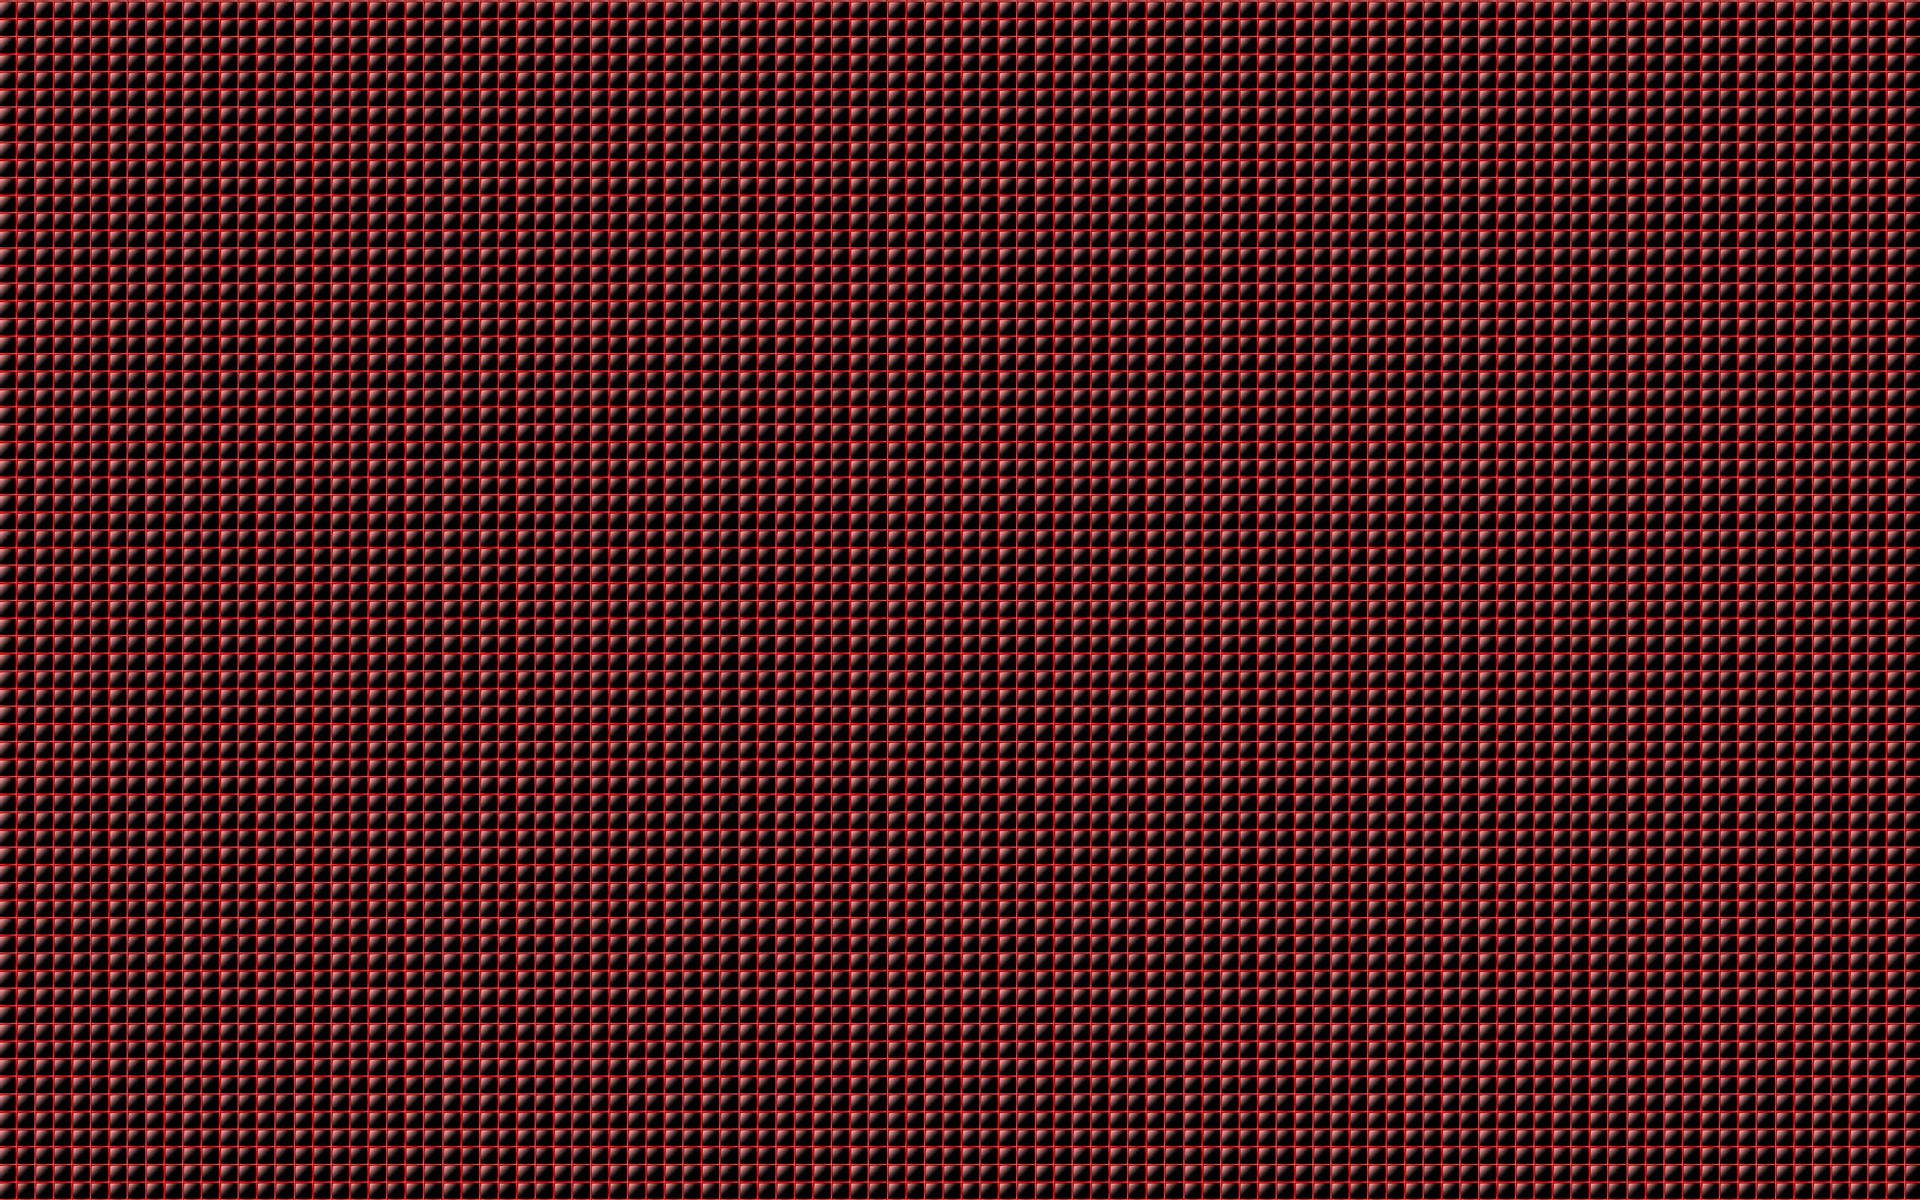 General 1920x1200 pattern grid simple background minimalism red